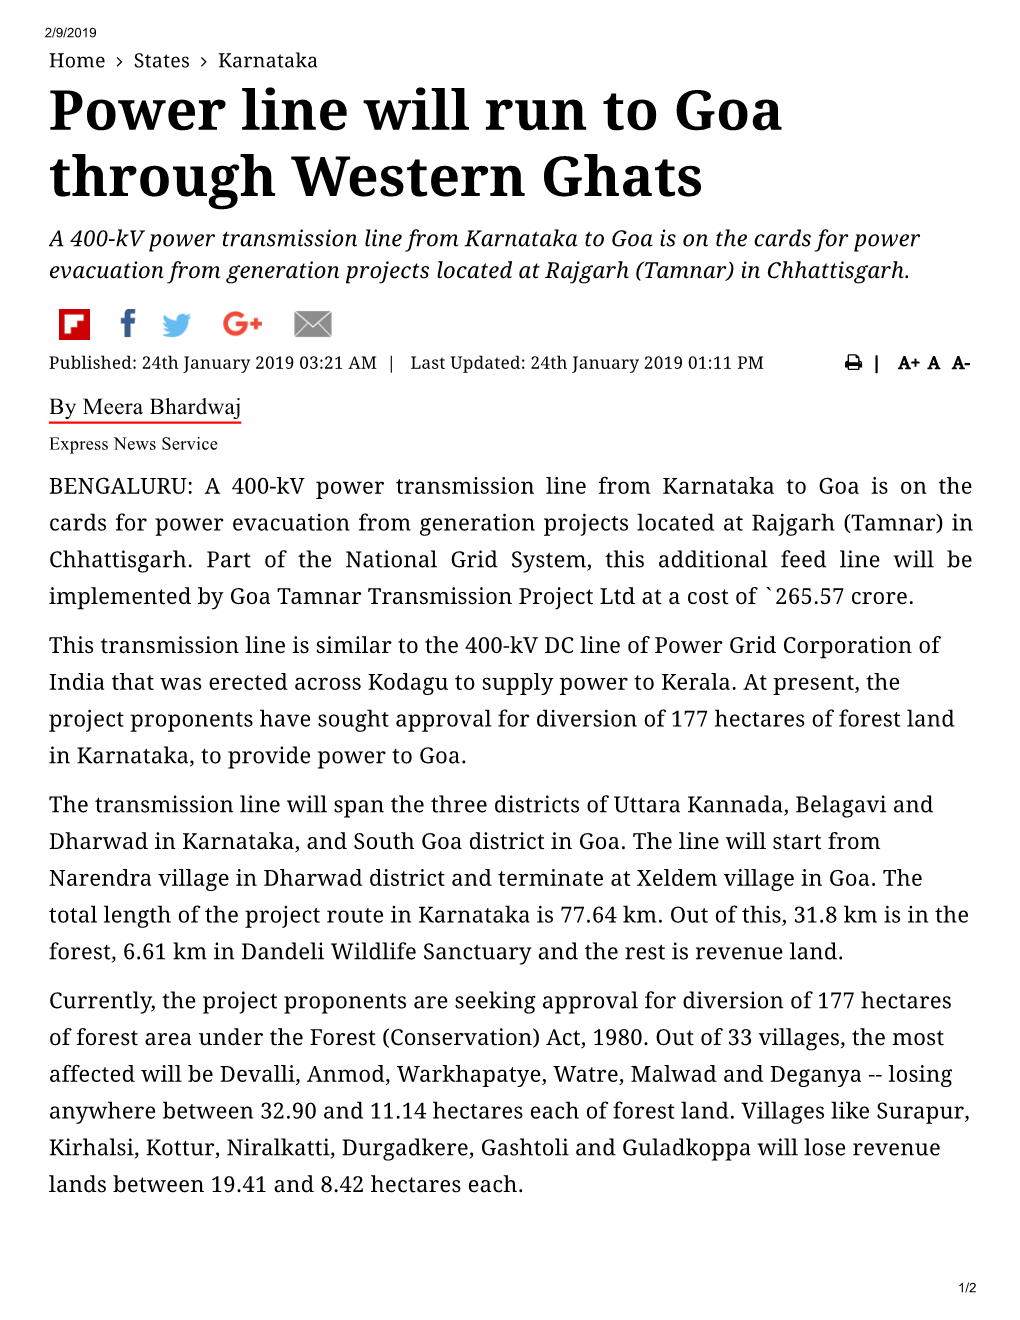 Power Line Will Run to Goa Through Western Ghats